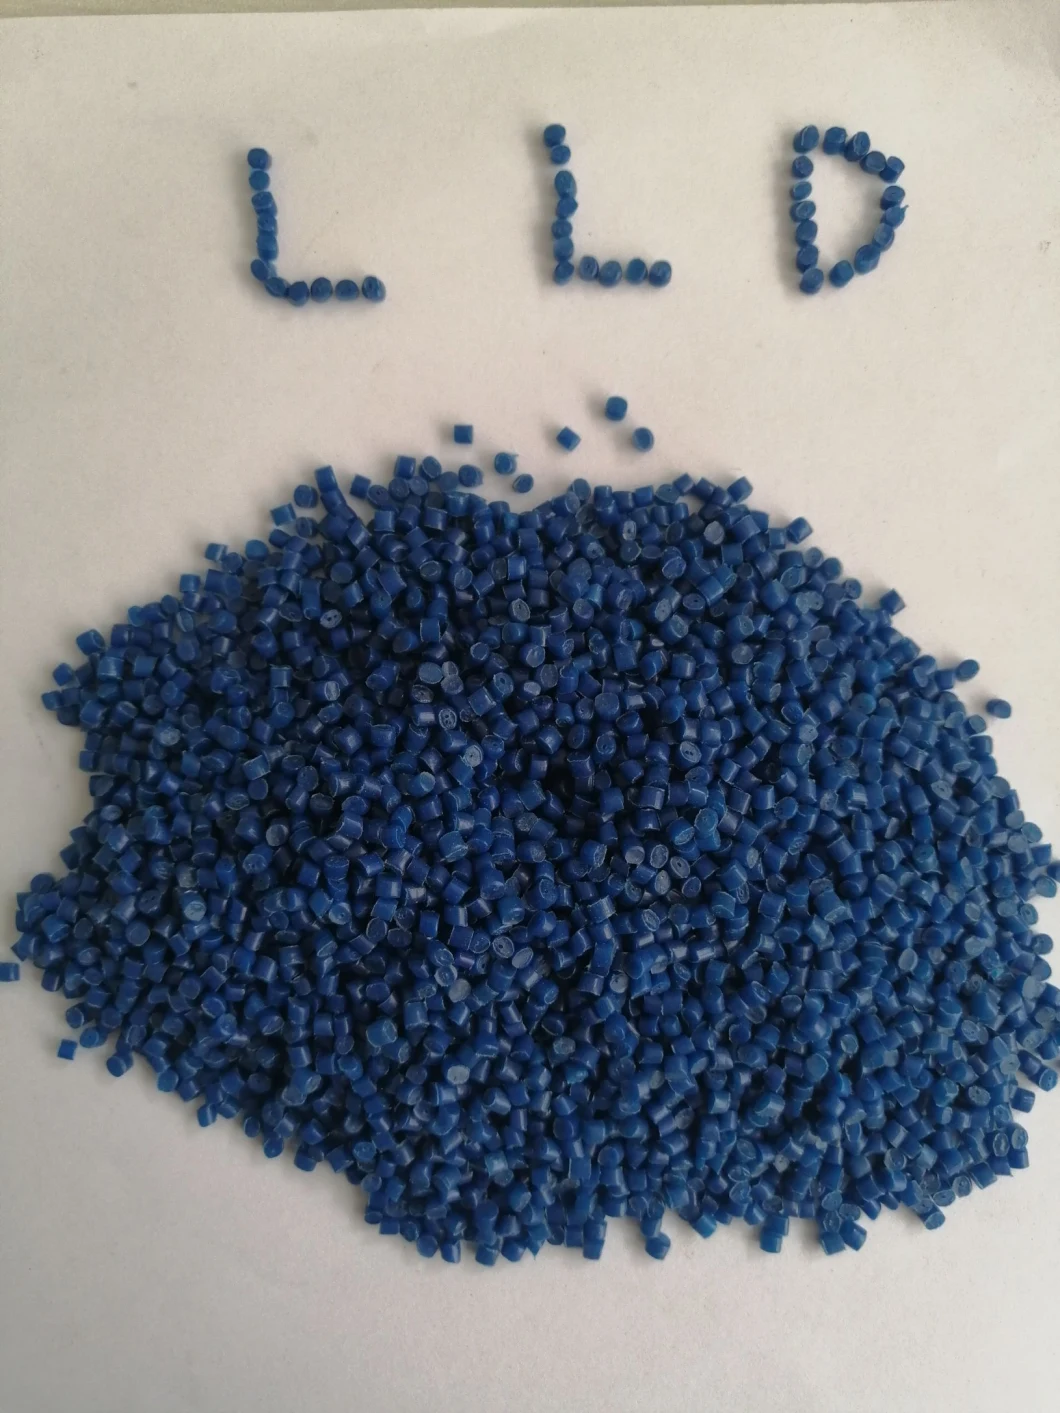 Virgin Recycled Granules HDPE LDPE LLDPE Linear Low Density Polyethylene